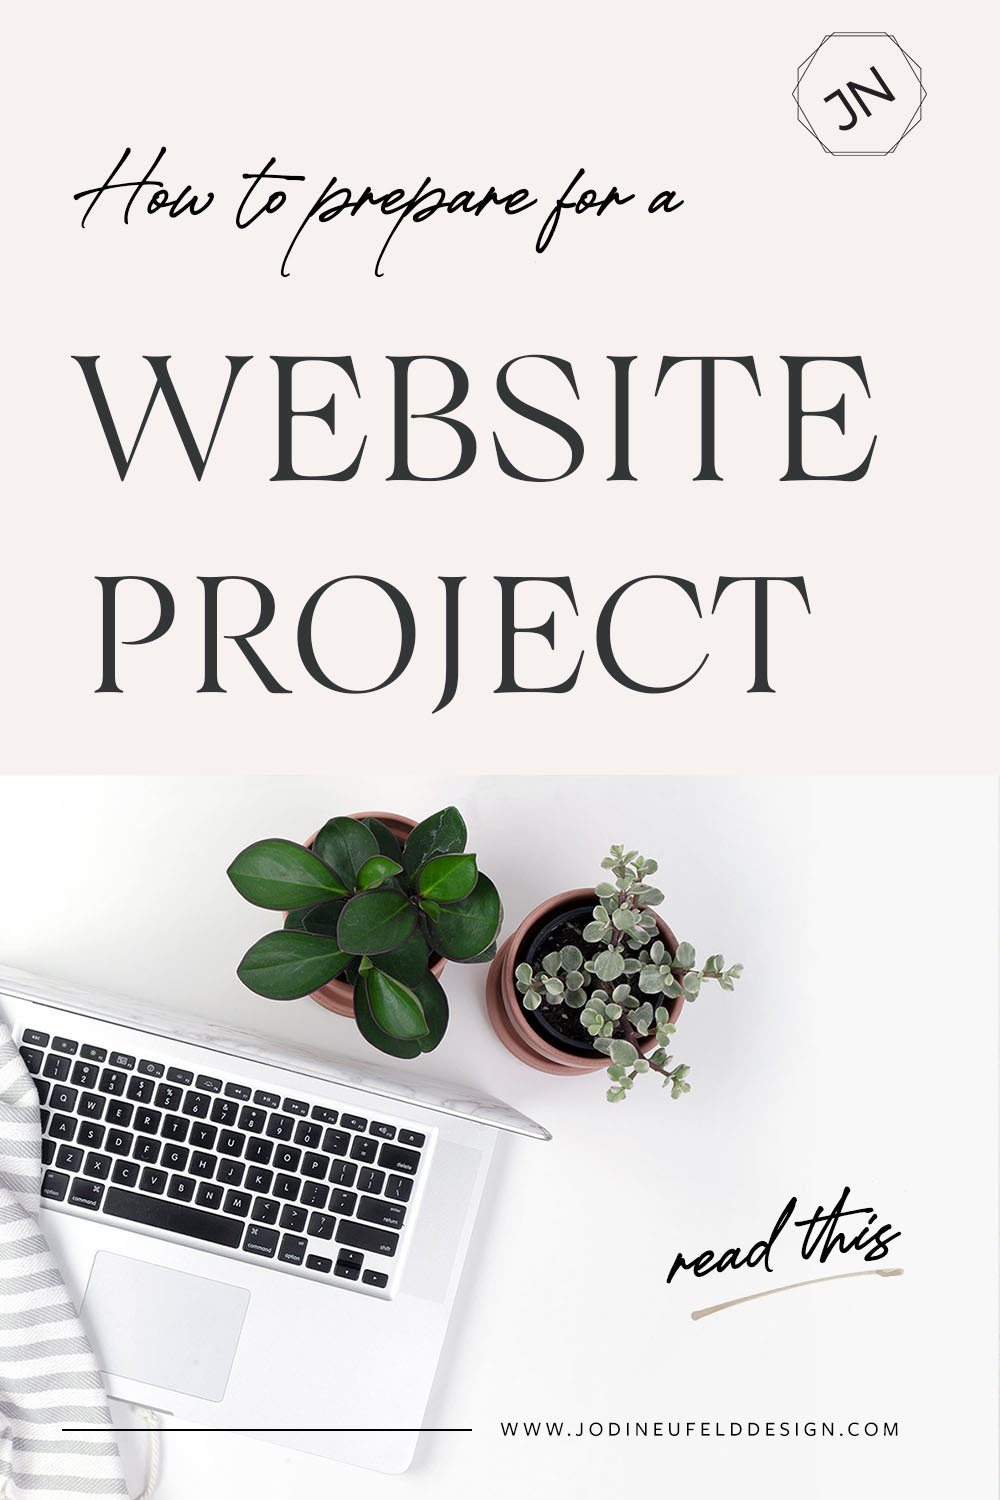 How to prepare for a website project — Jodi Neufeld Design ...